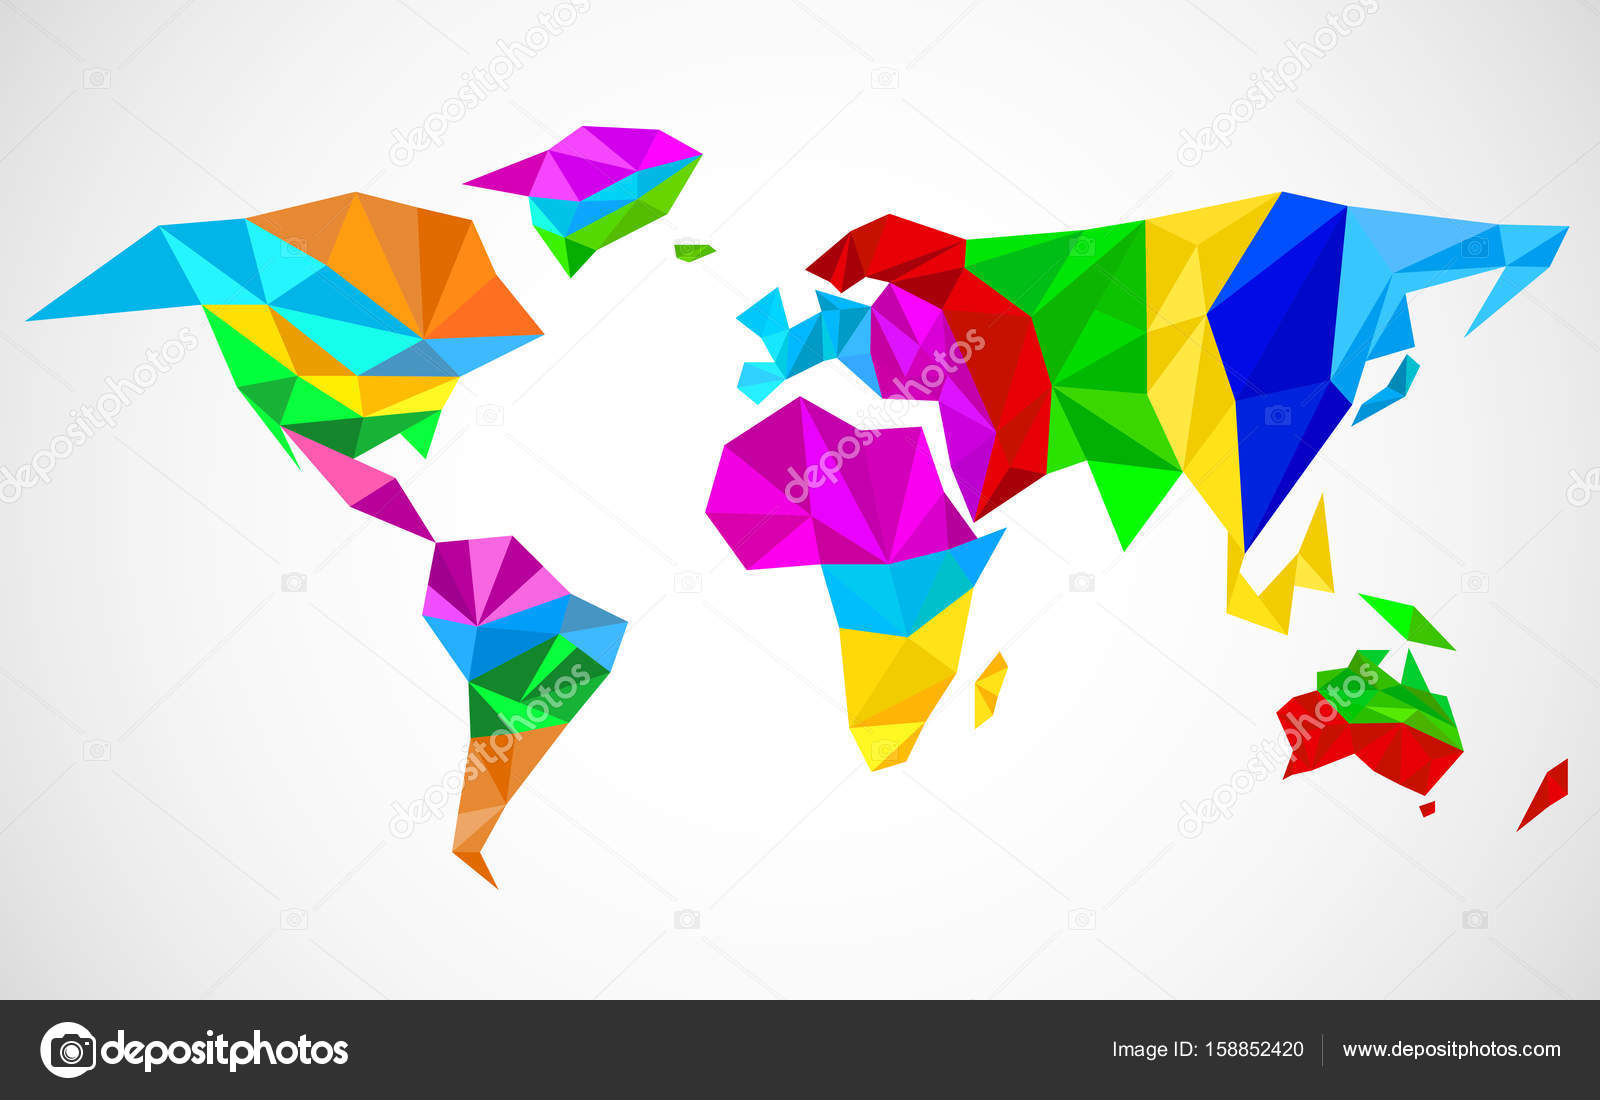 Mapa Del Mundo Vectorial Composicion Geometrica Coloreada Eps 10 Images